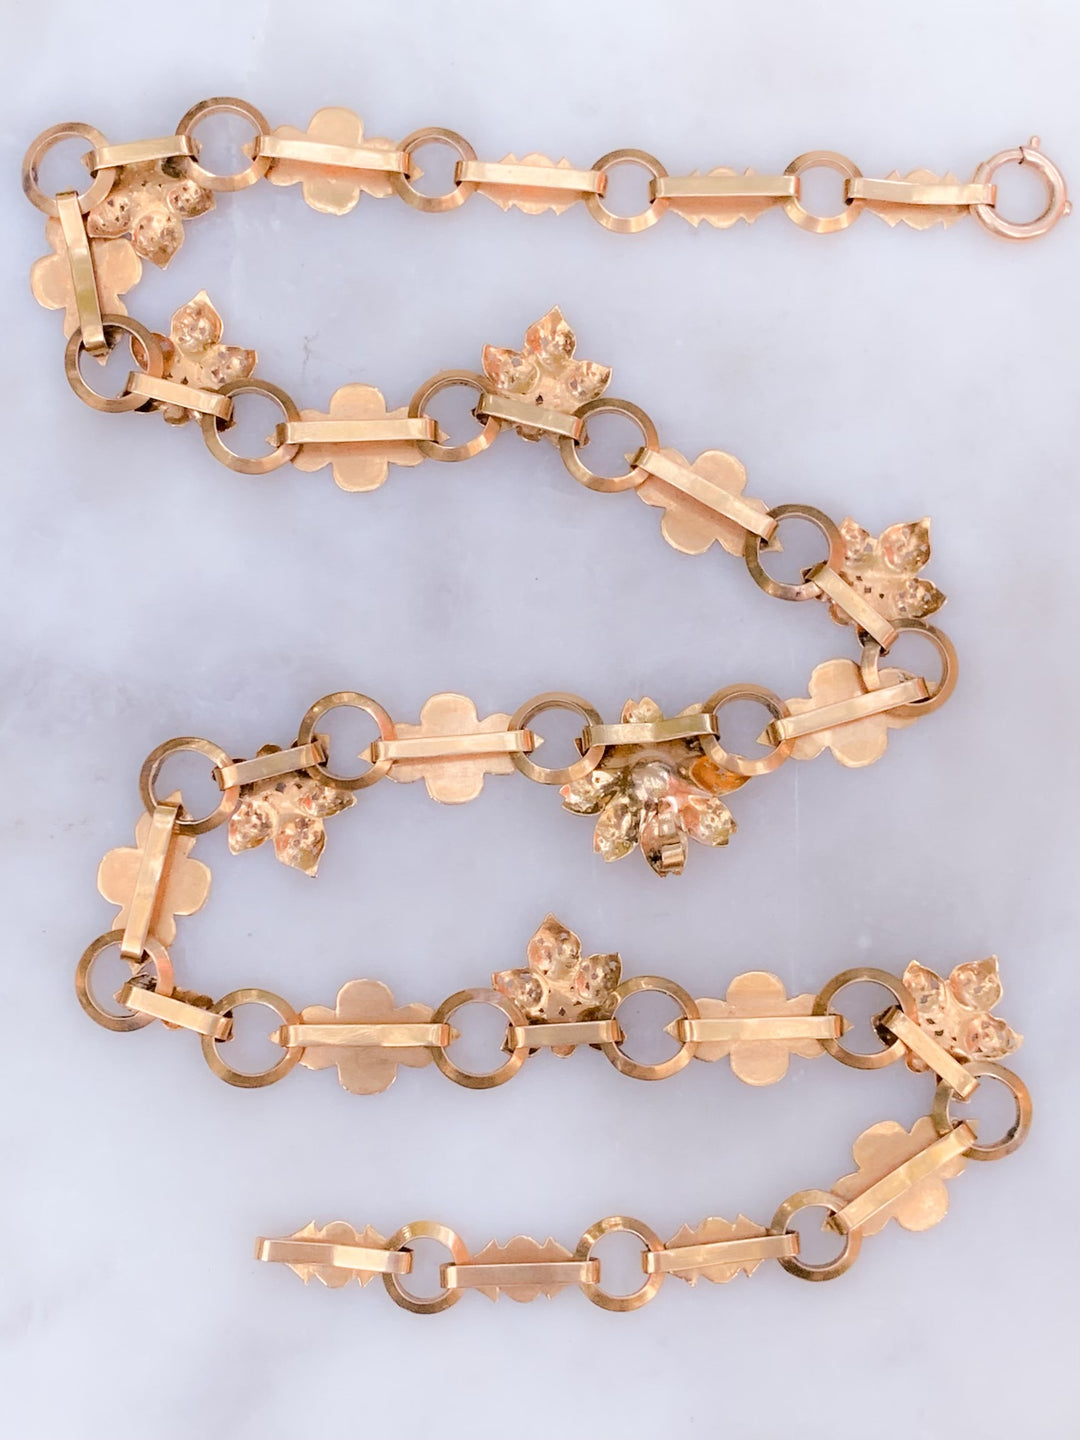 American 18k Floral Book Chain Necklace Circa 1870